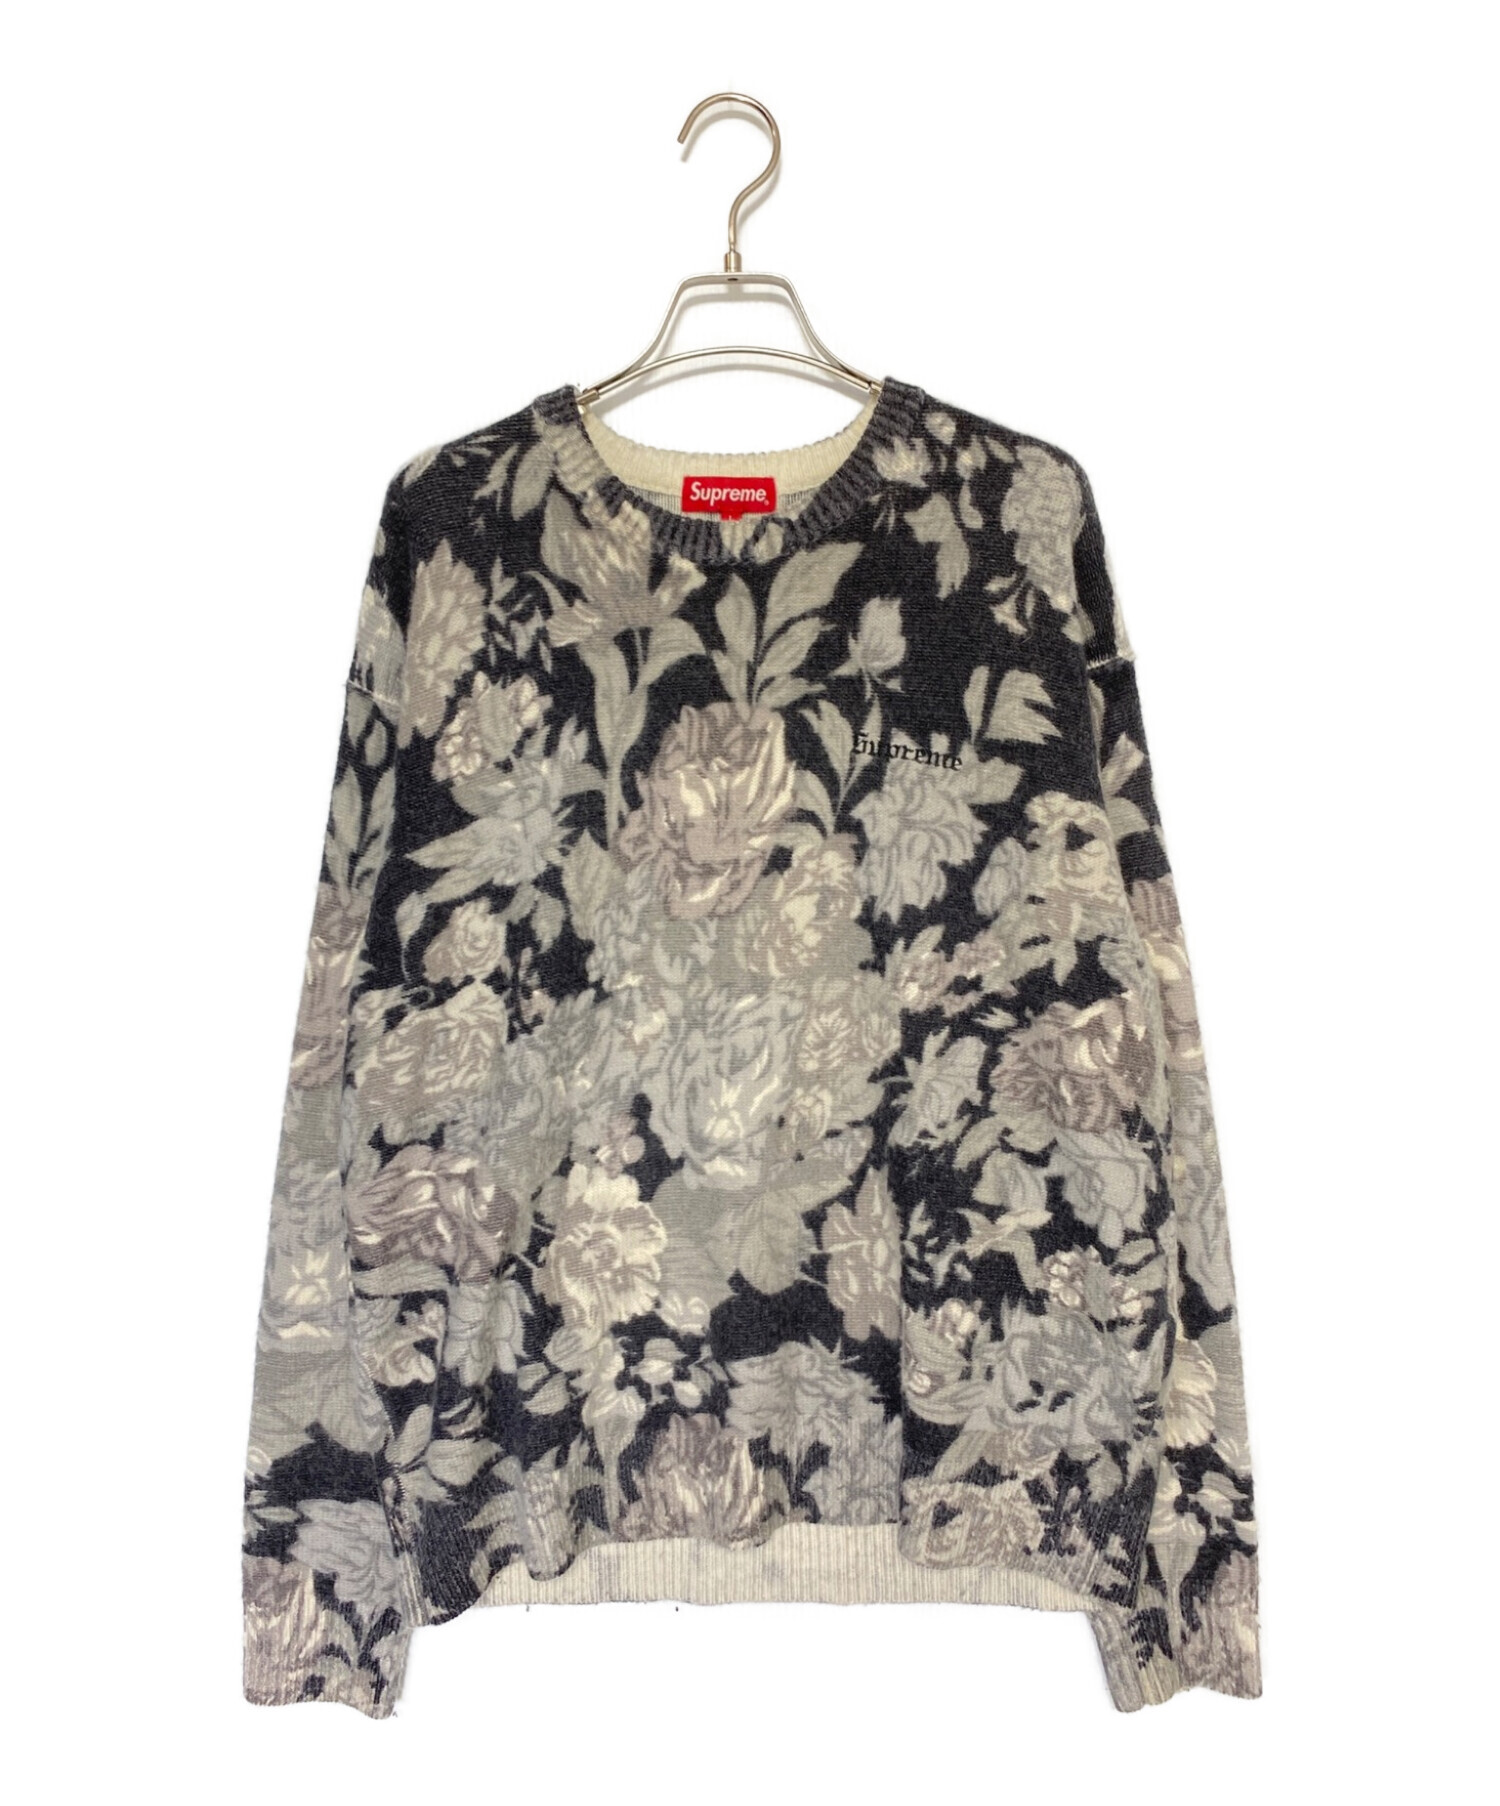 Supreme Floral Angora Sweater L - ニット/セーター